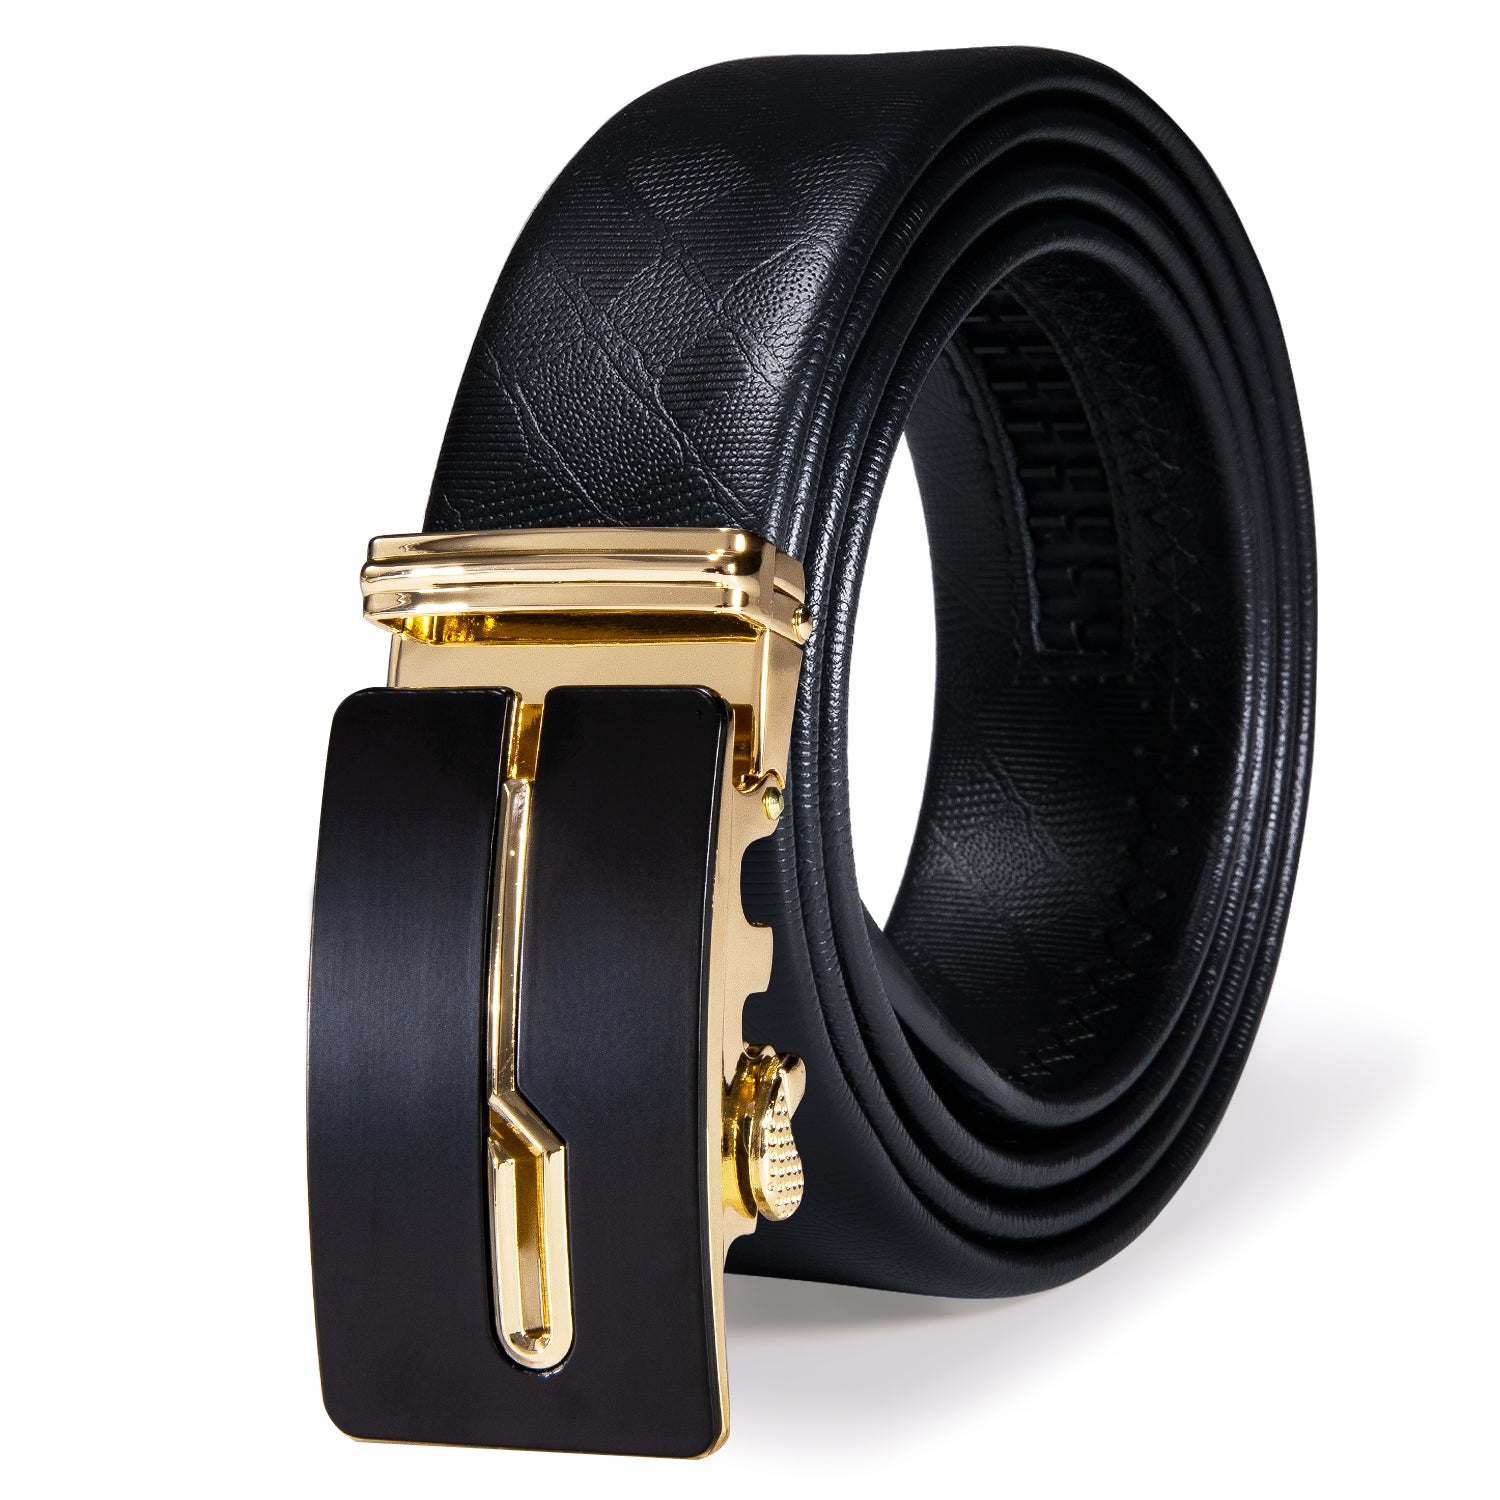 New Novelty Golden Metal Buckle Genuine Leather Belt